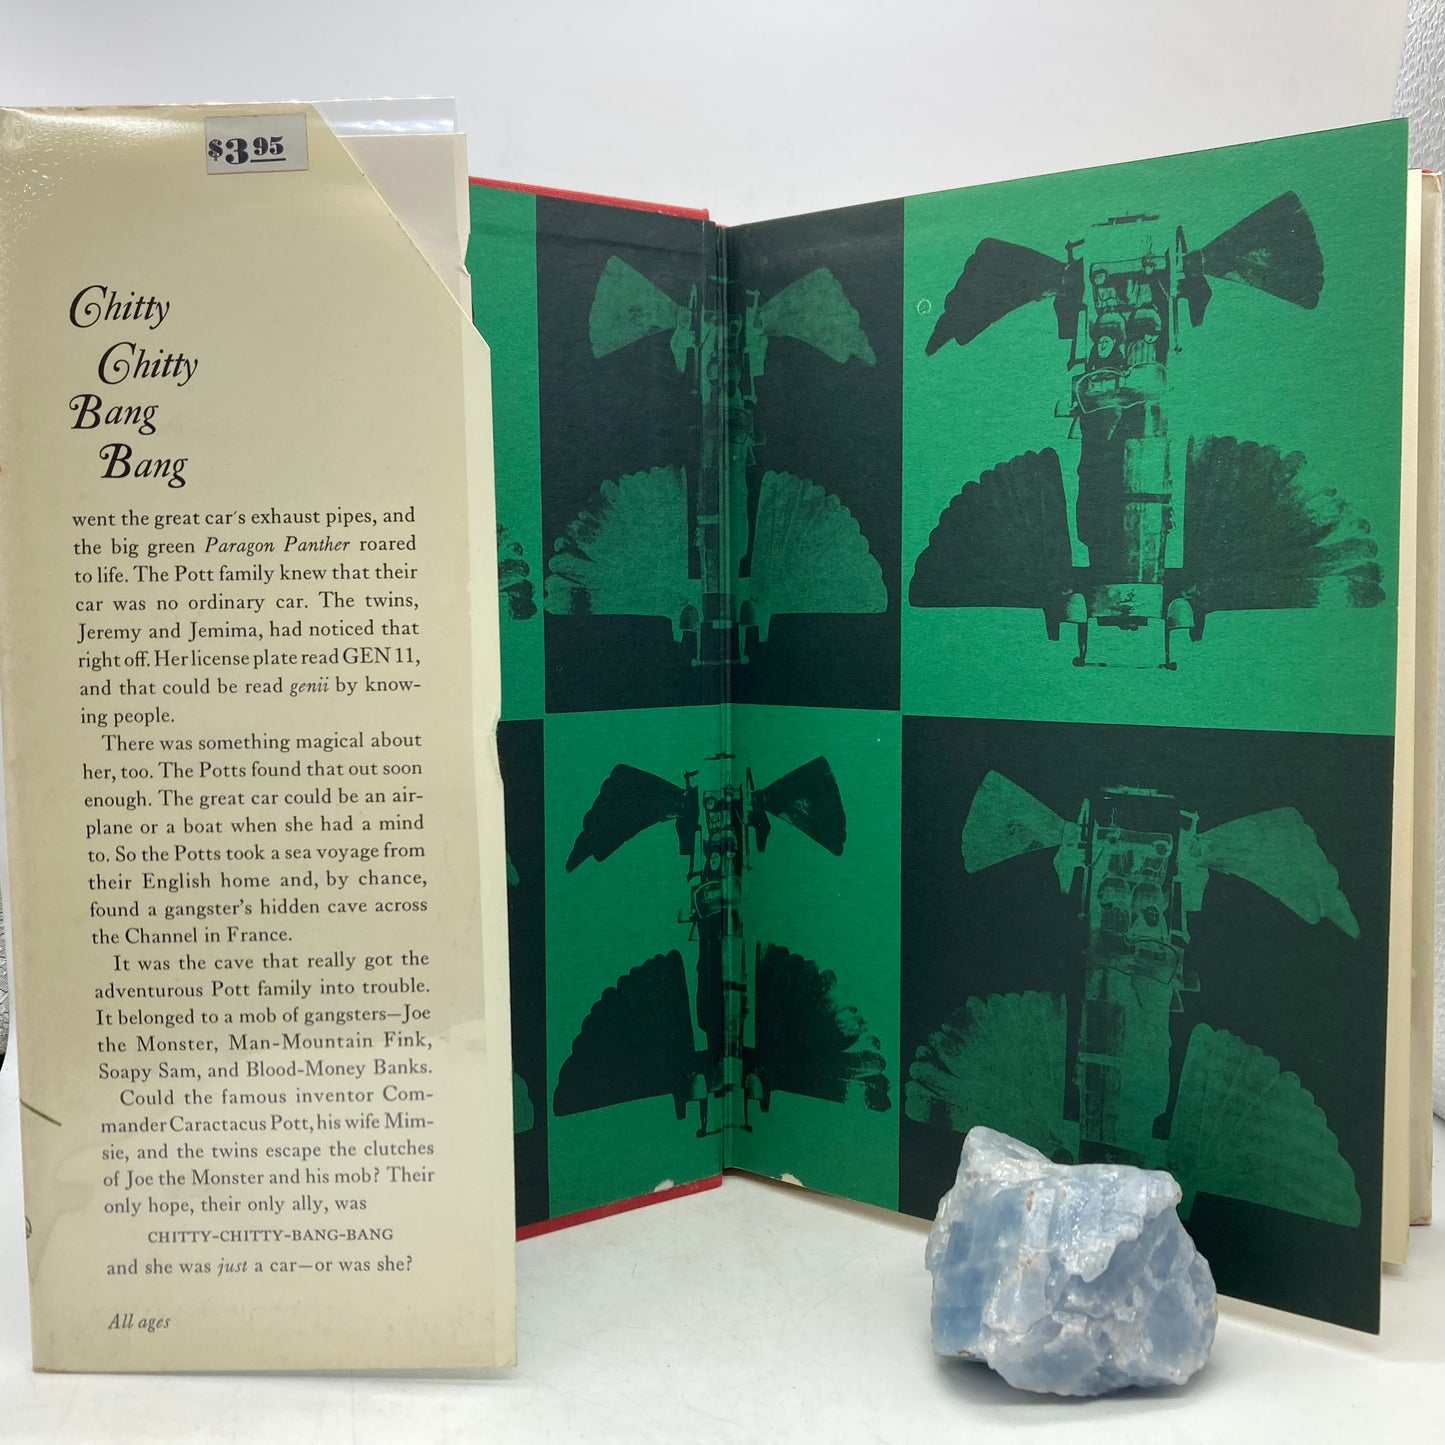 FLEMING, Ian "Chitty Chitty Bang Bang, The Magical Car" [Random House, 1964] 1st Edition